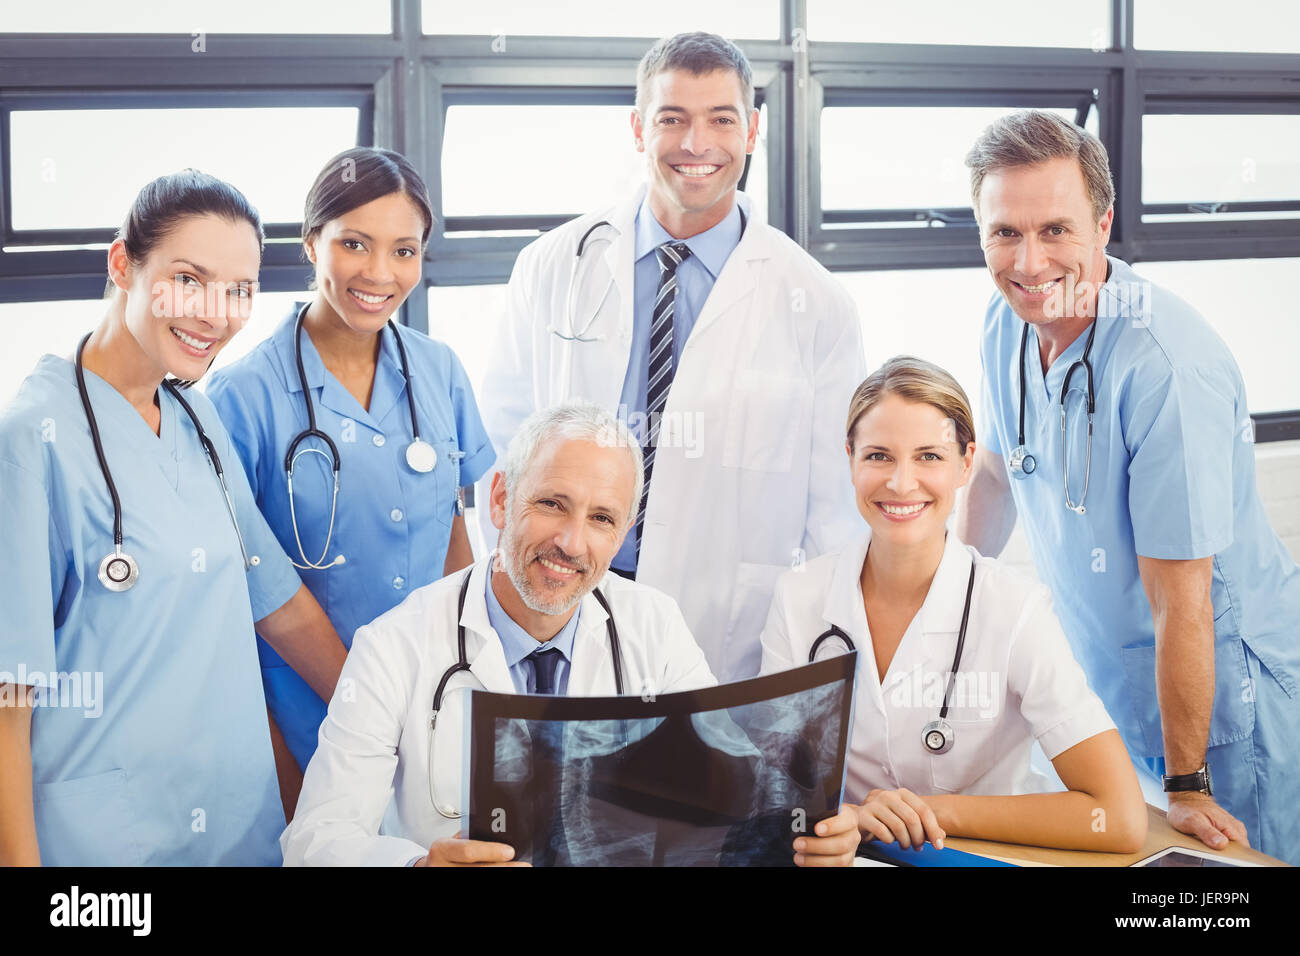 Medizinisches Team hält einen Röntgen-Bericht Stockfoto